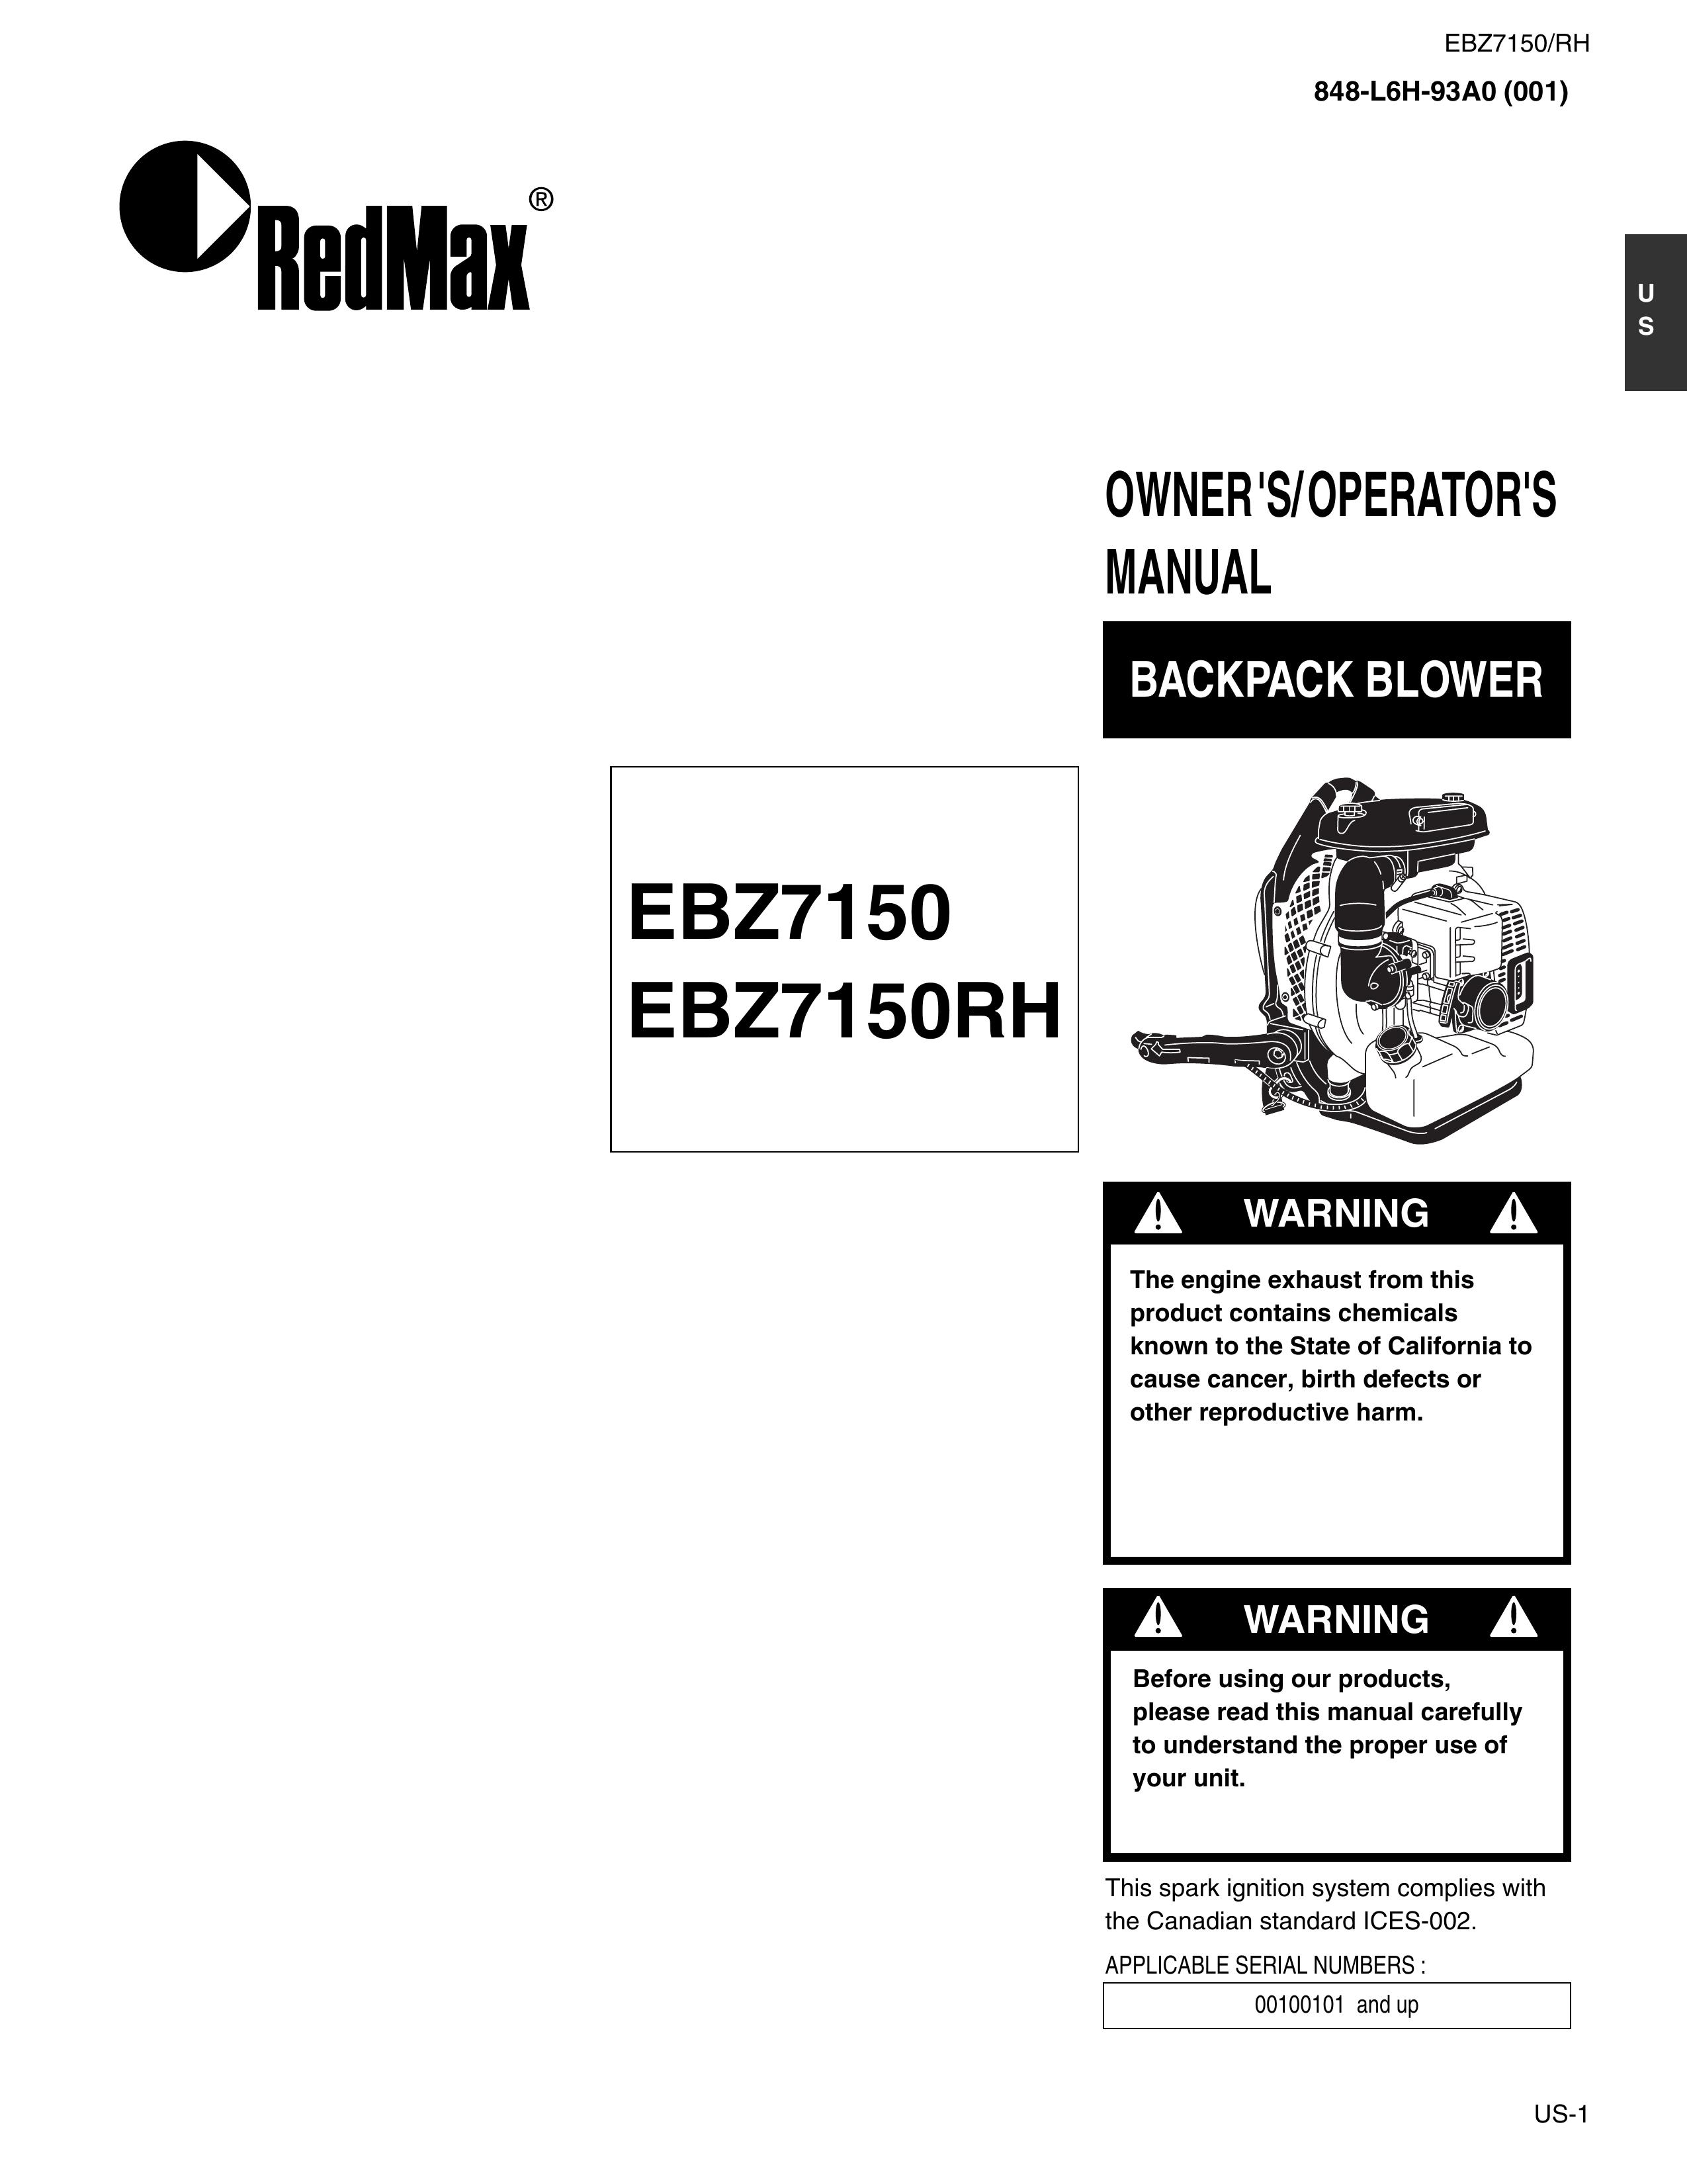 RedMax EBZ7150RH Blower User Manual